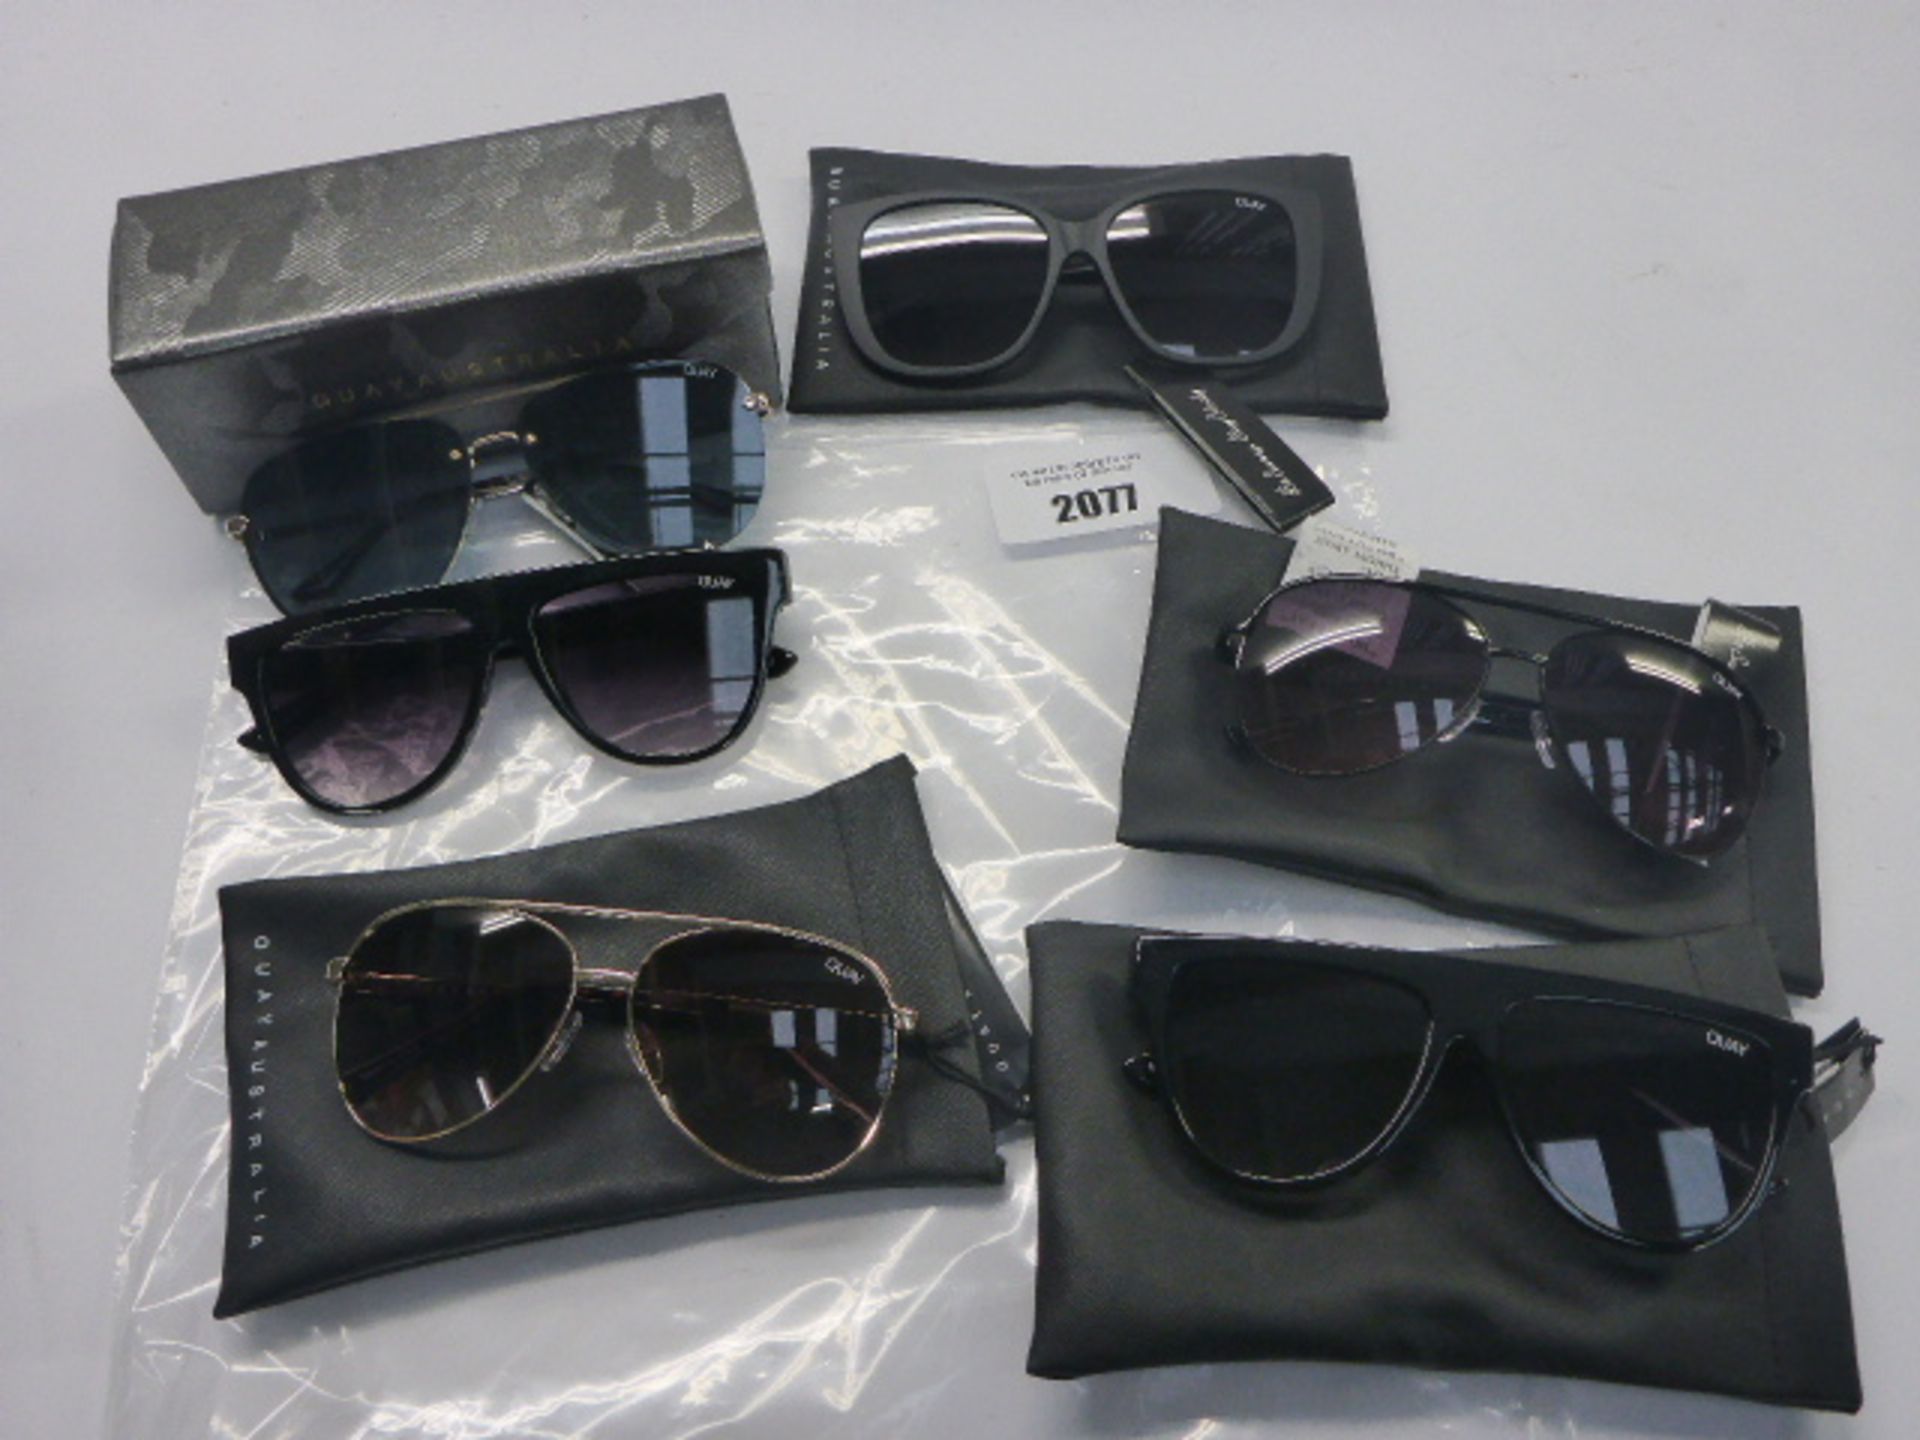 Six Quay Australia Sunglasses in soft and hard cases.